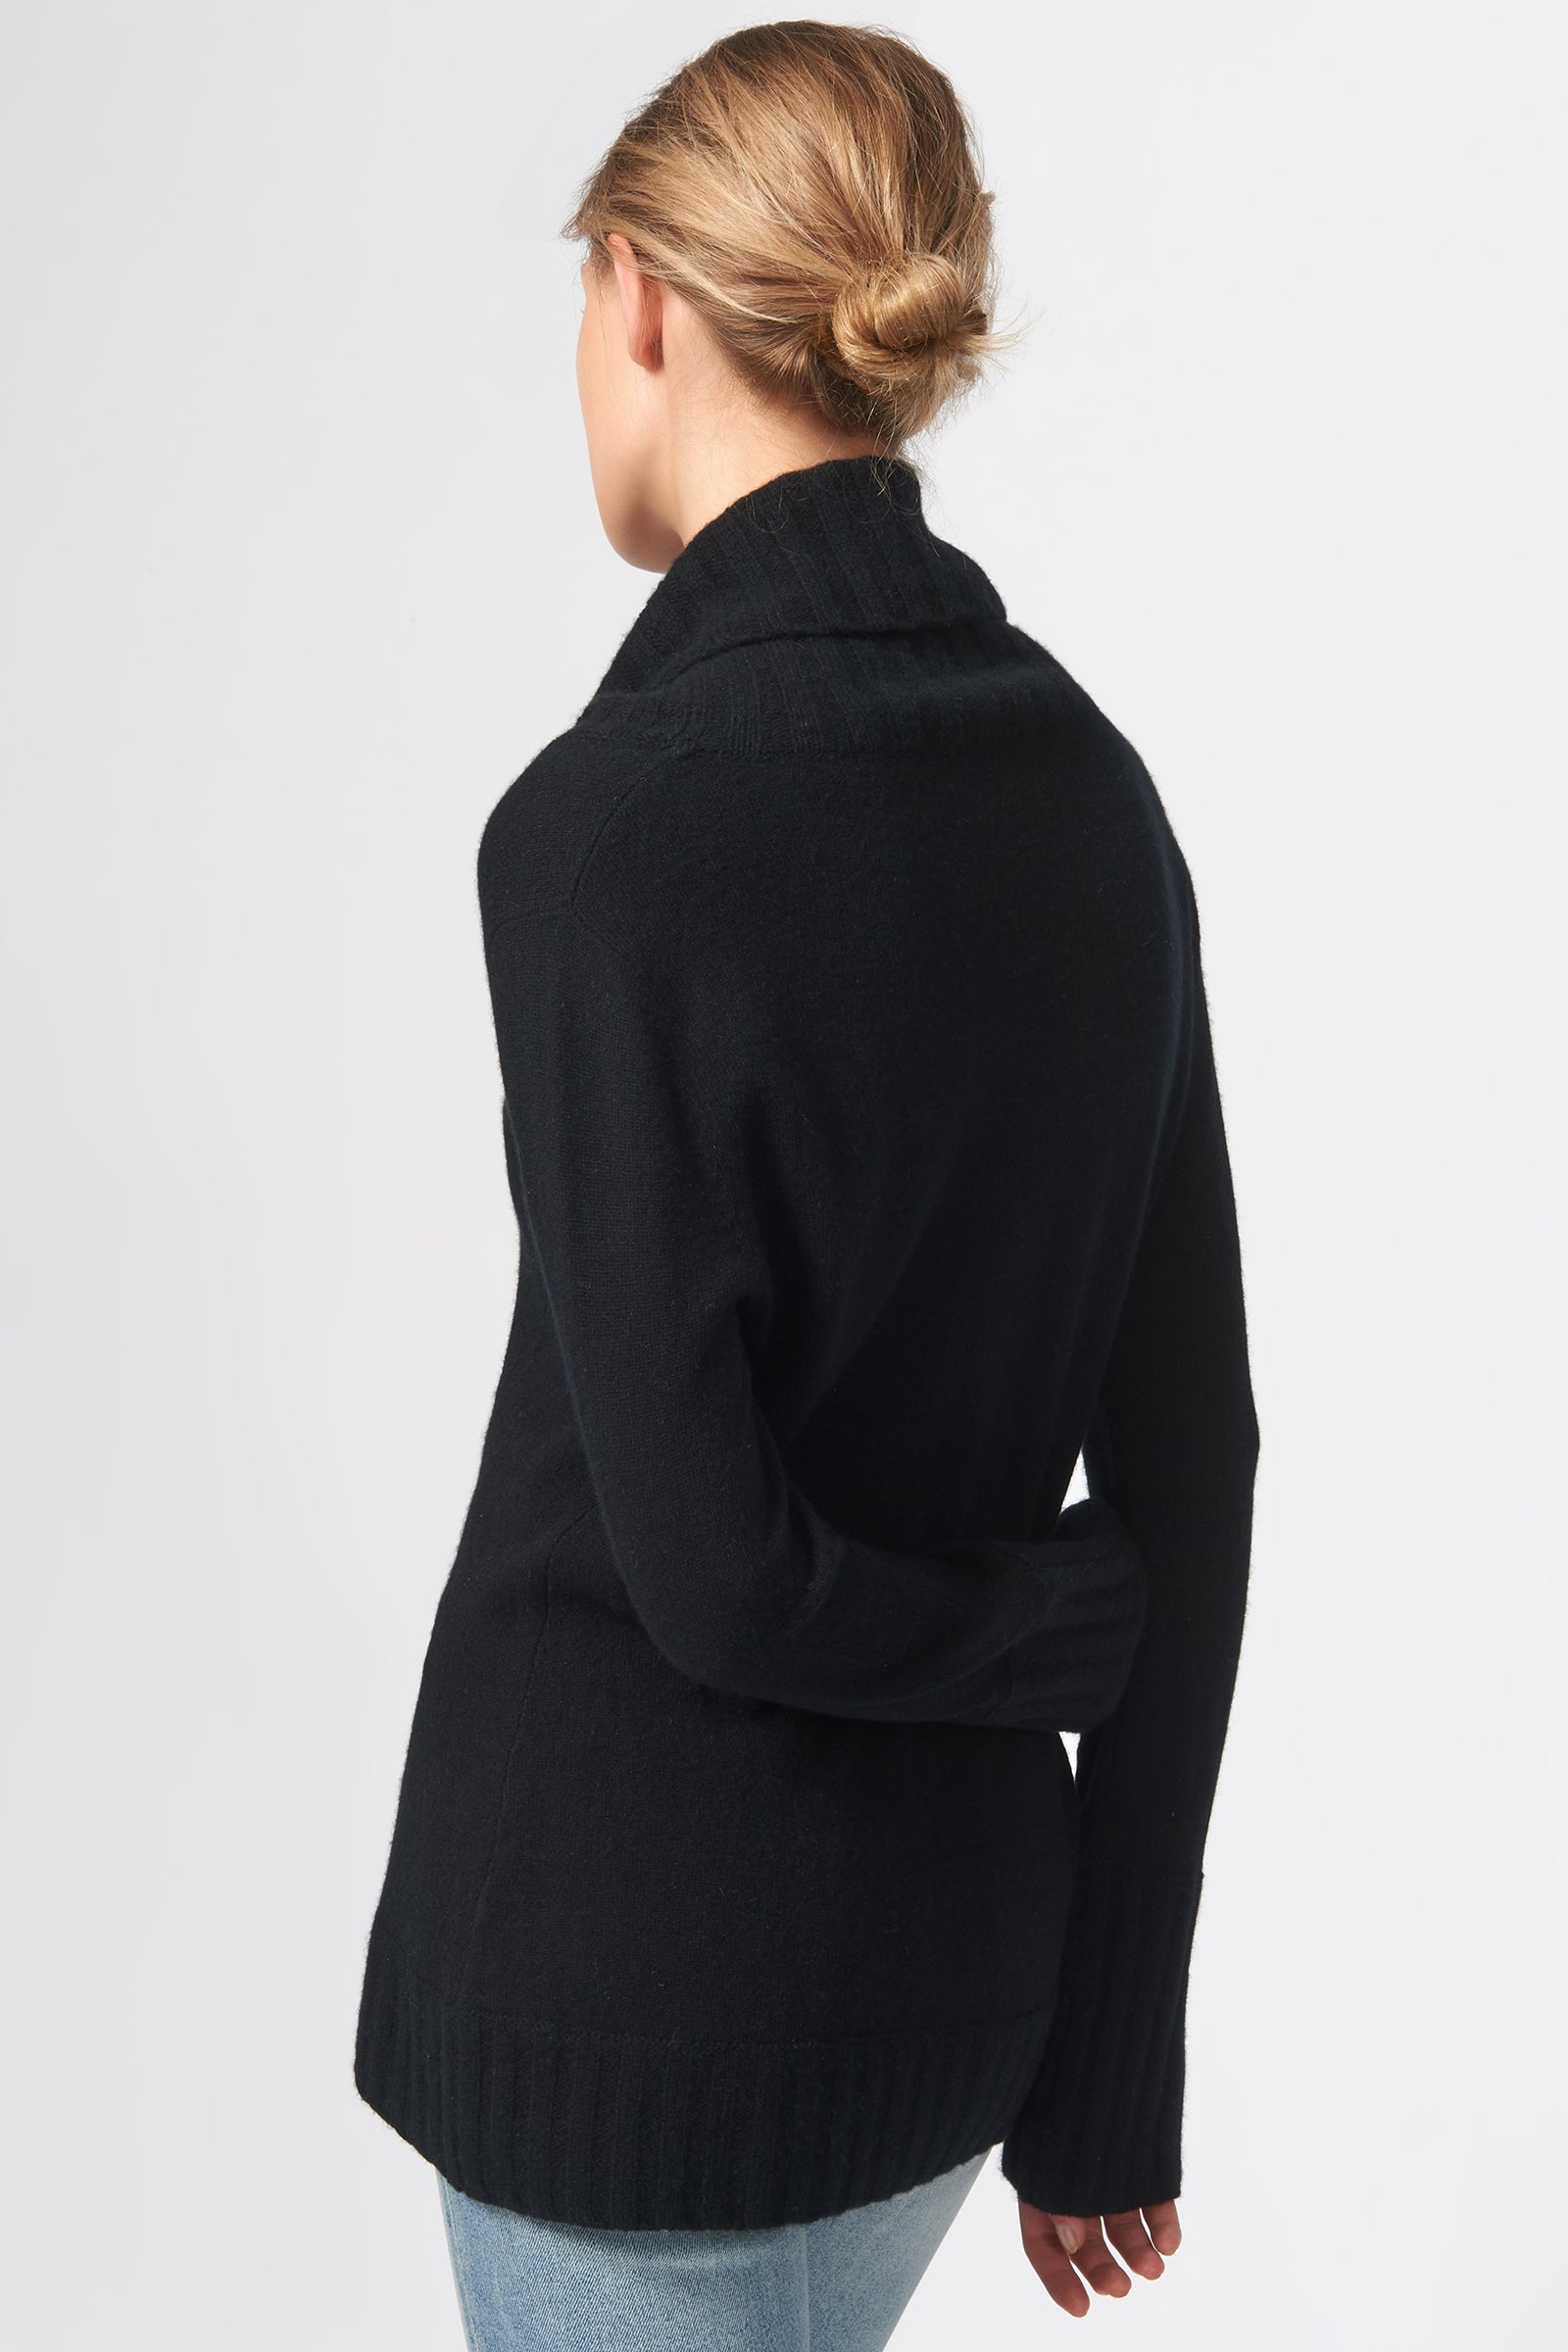 Kal Rieman Cashmere Cowel T-Neck in Black on Model Front View